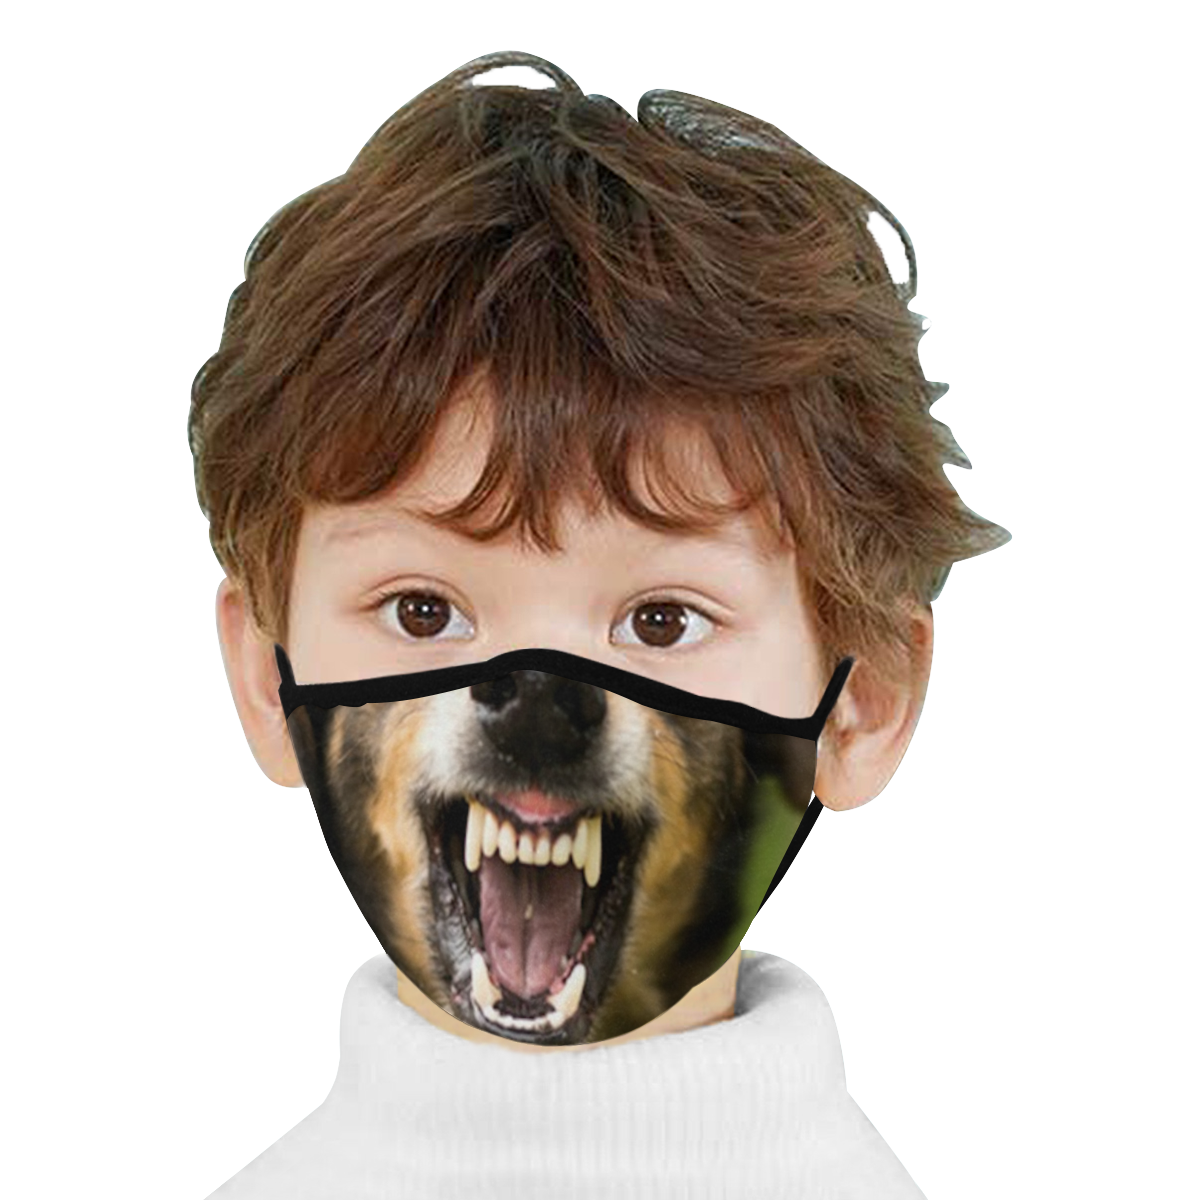 doggrowl Mouth Mask